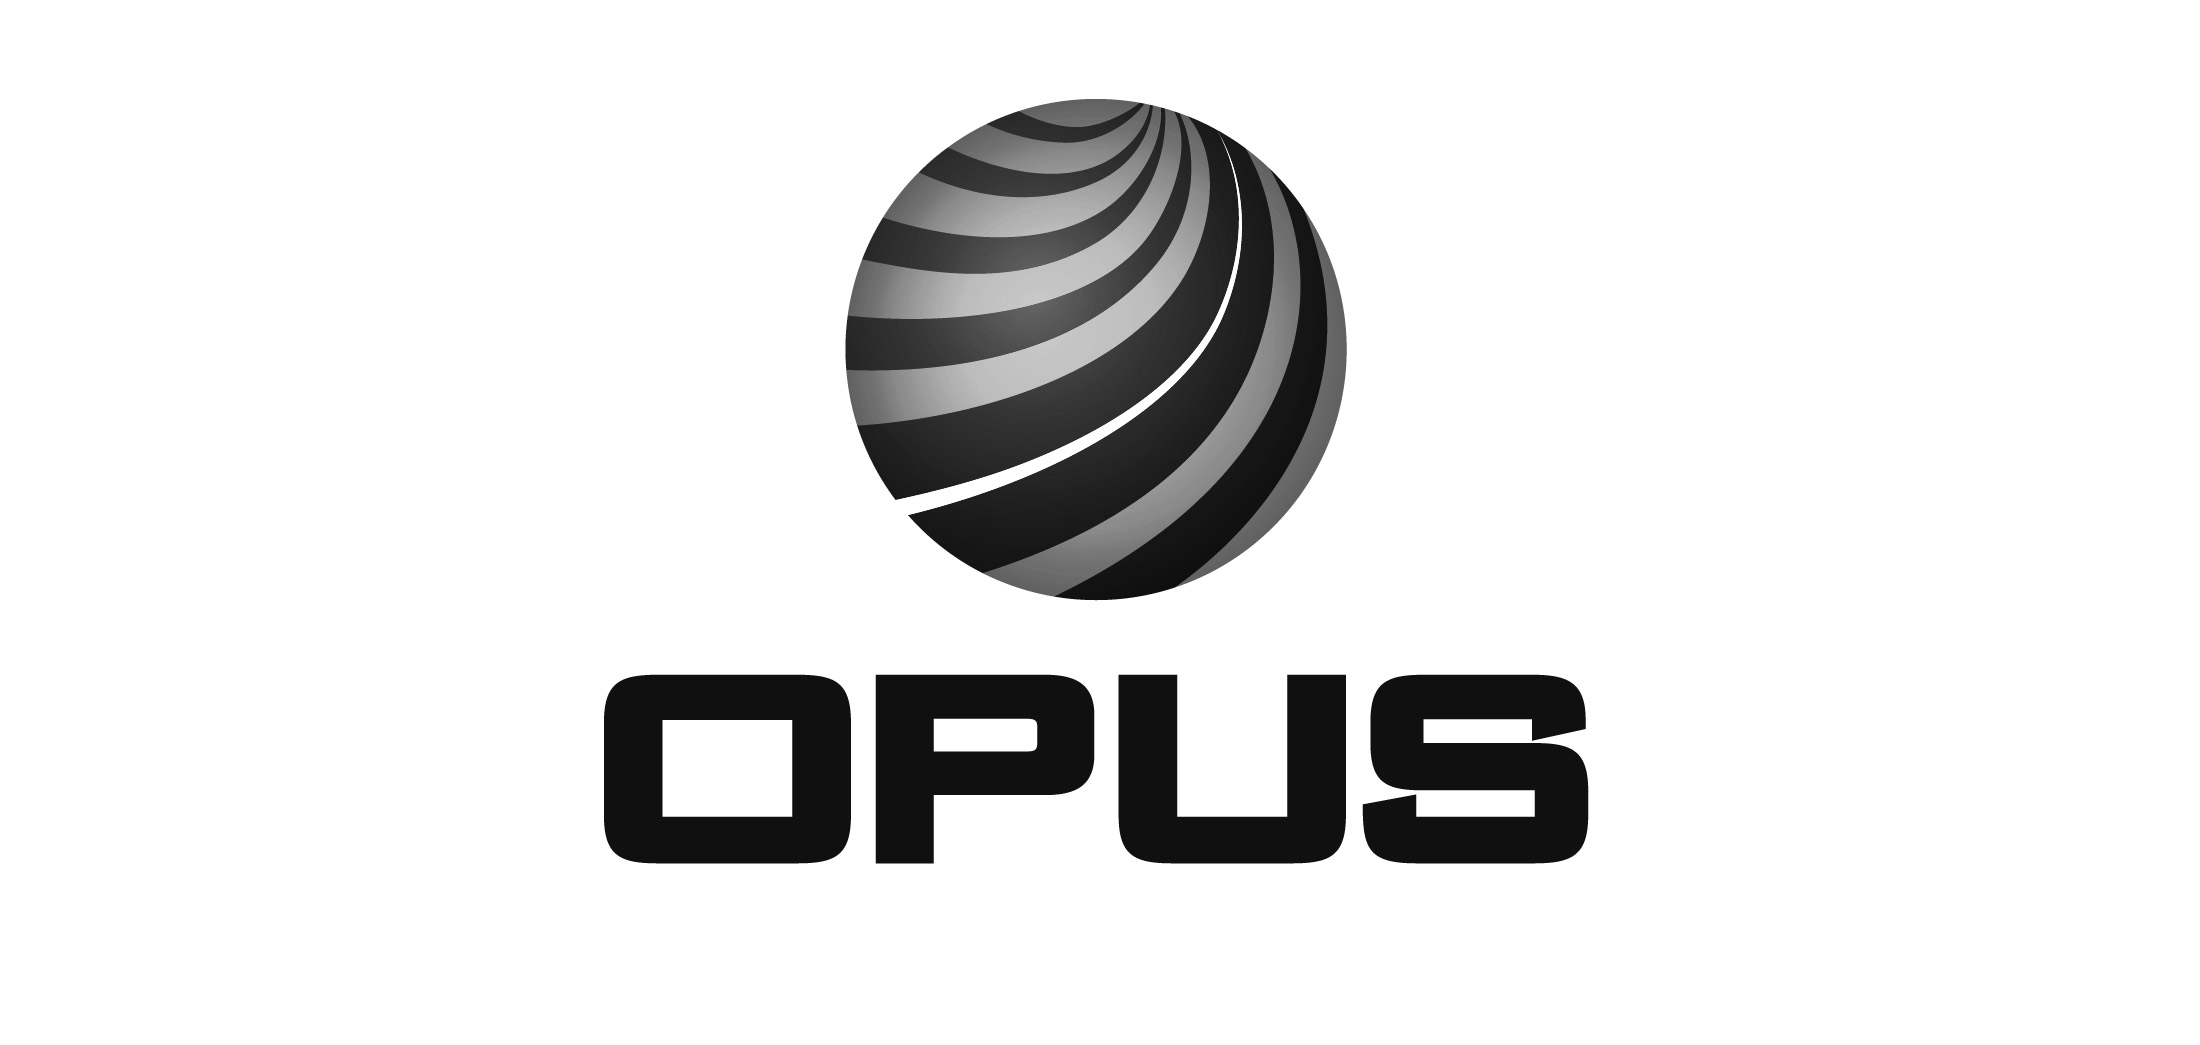 opus-logo_stand.jpg